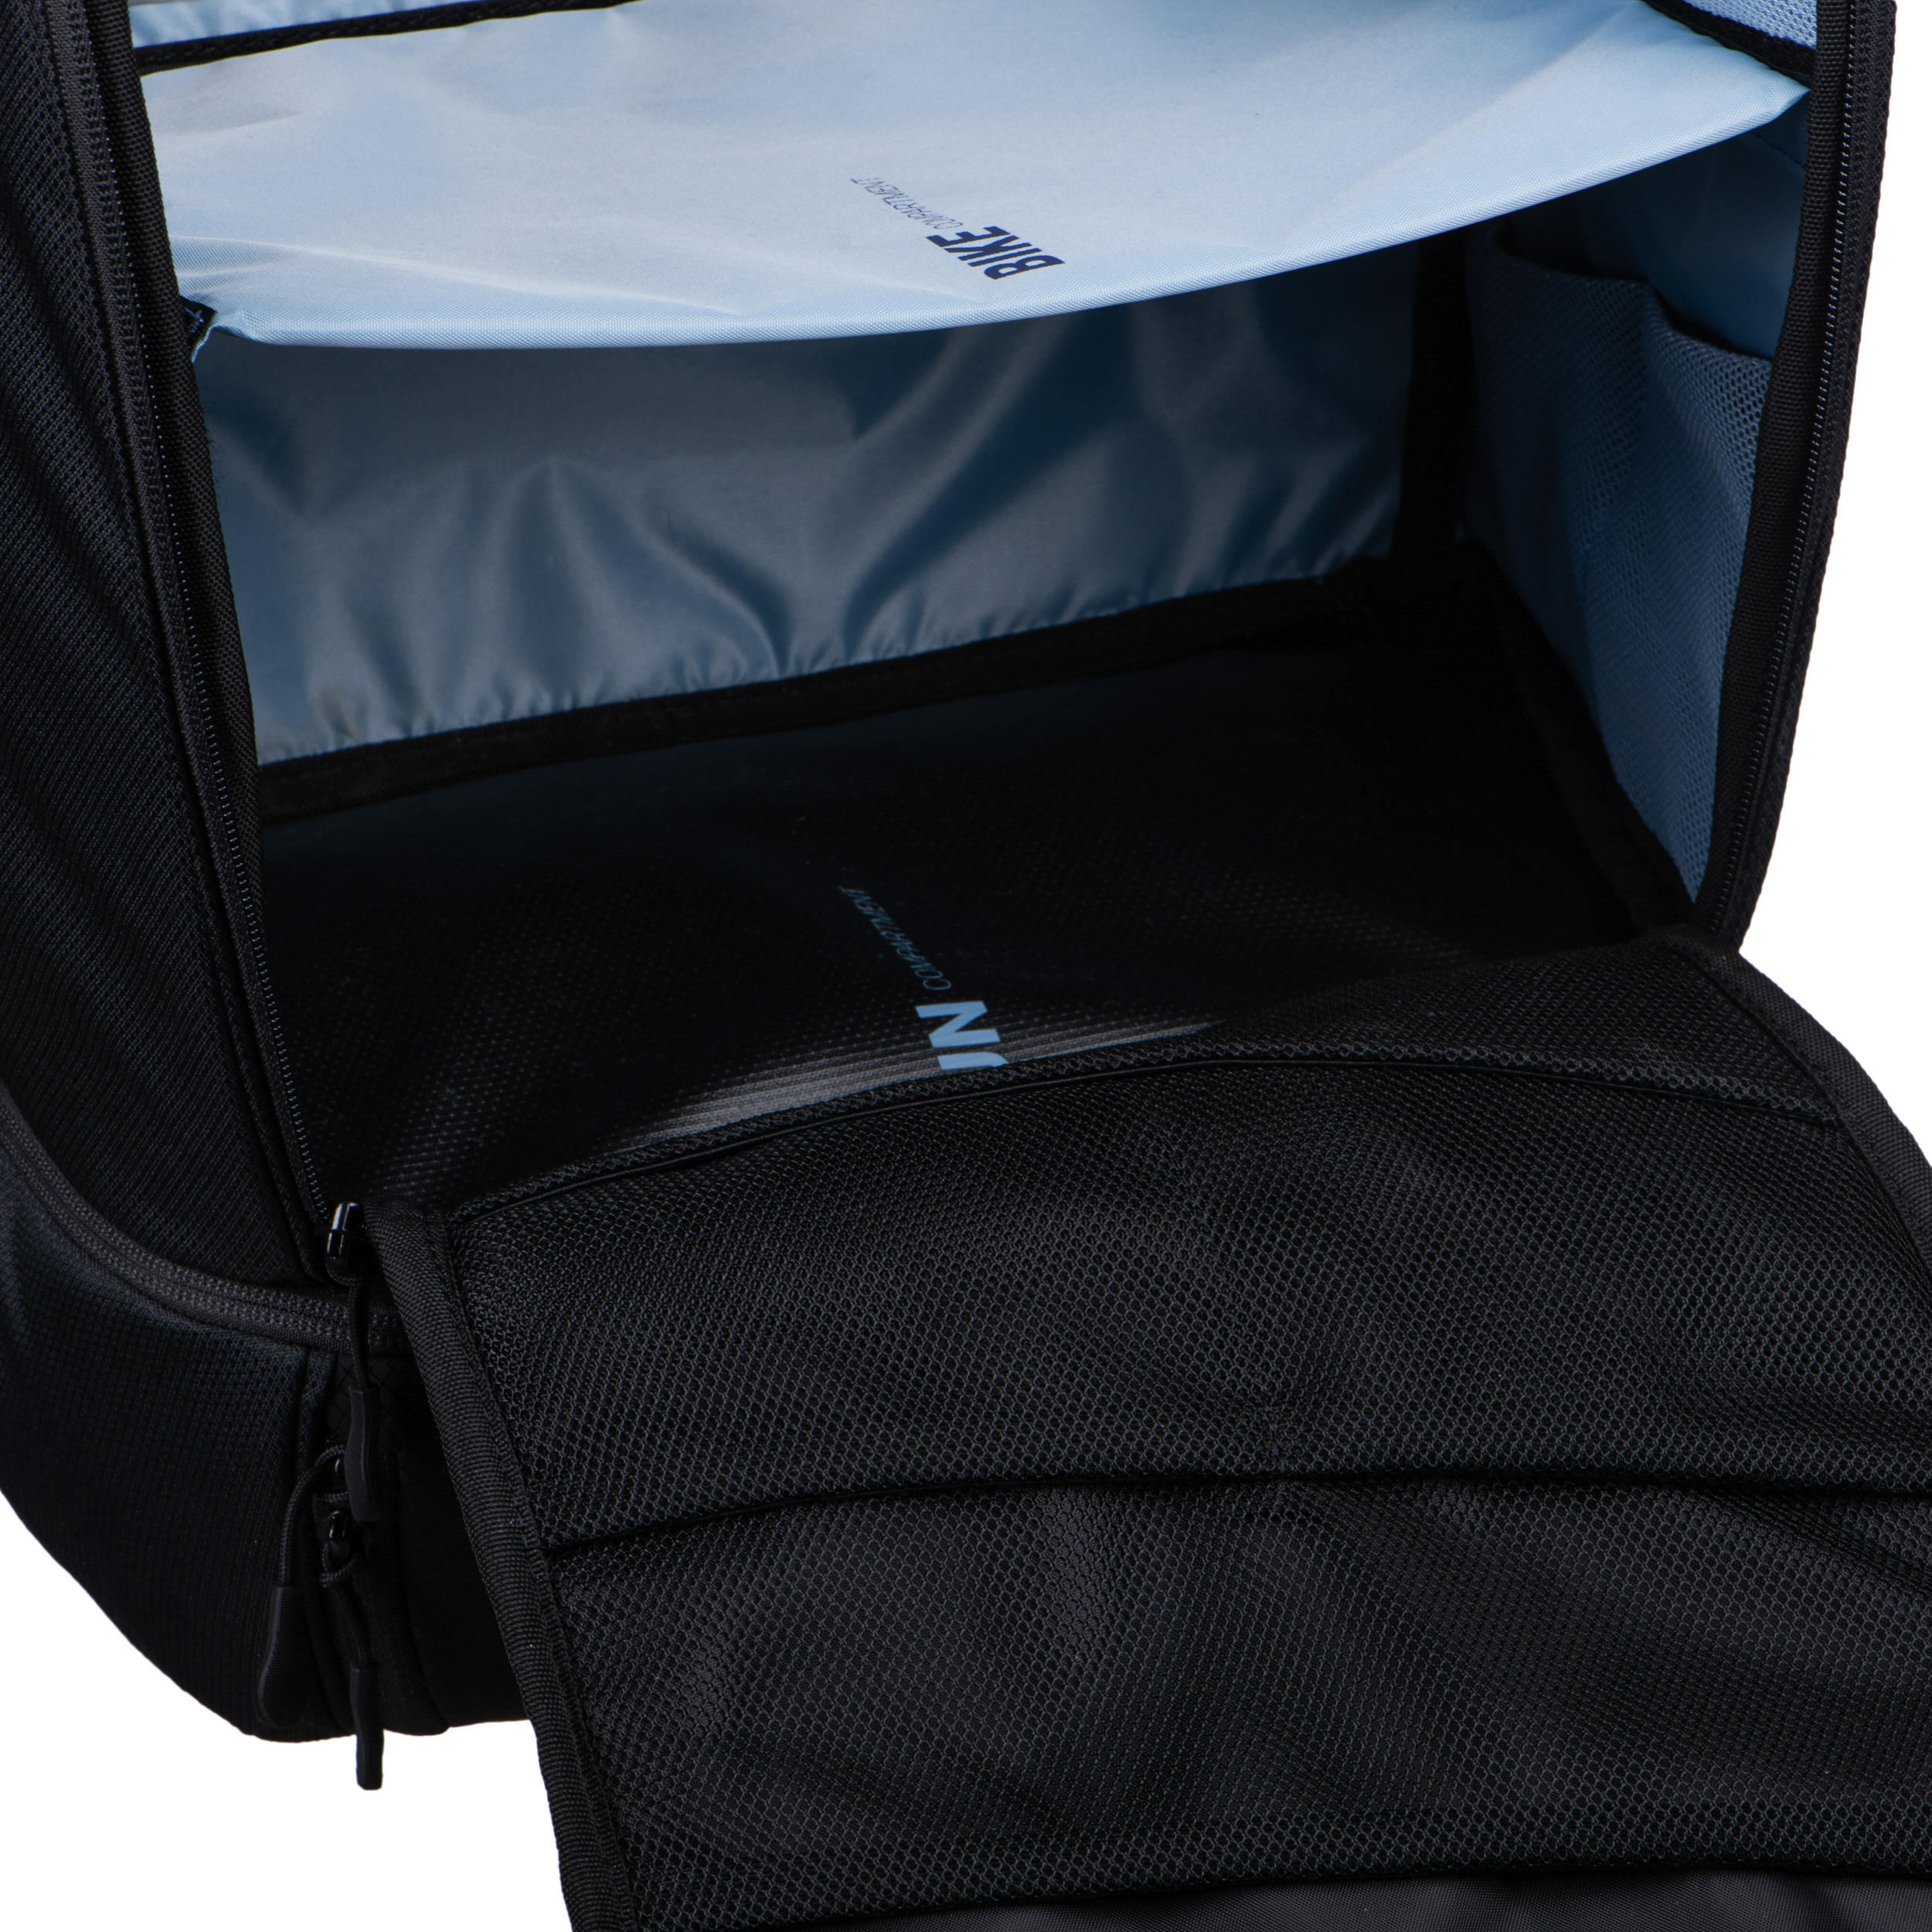 Aptonia Triathlon Transition Bag 35L - Black/Blue 9/10